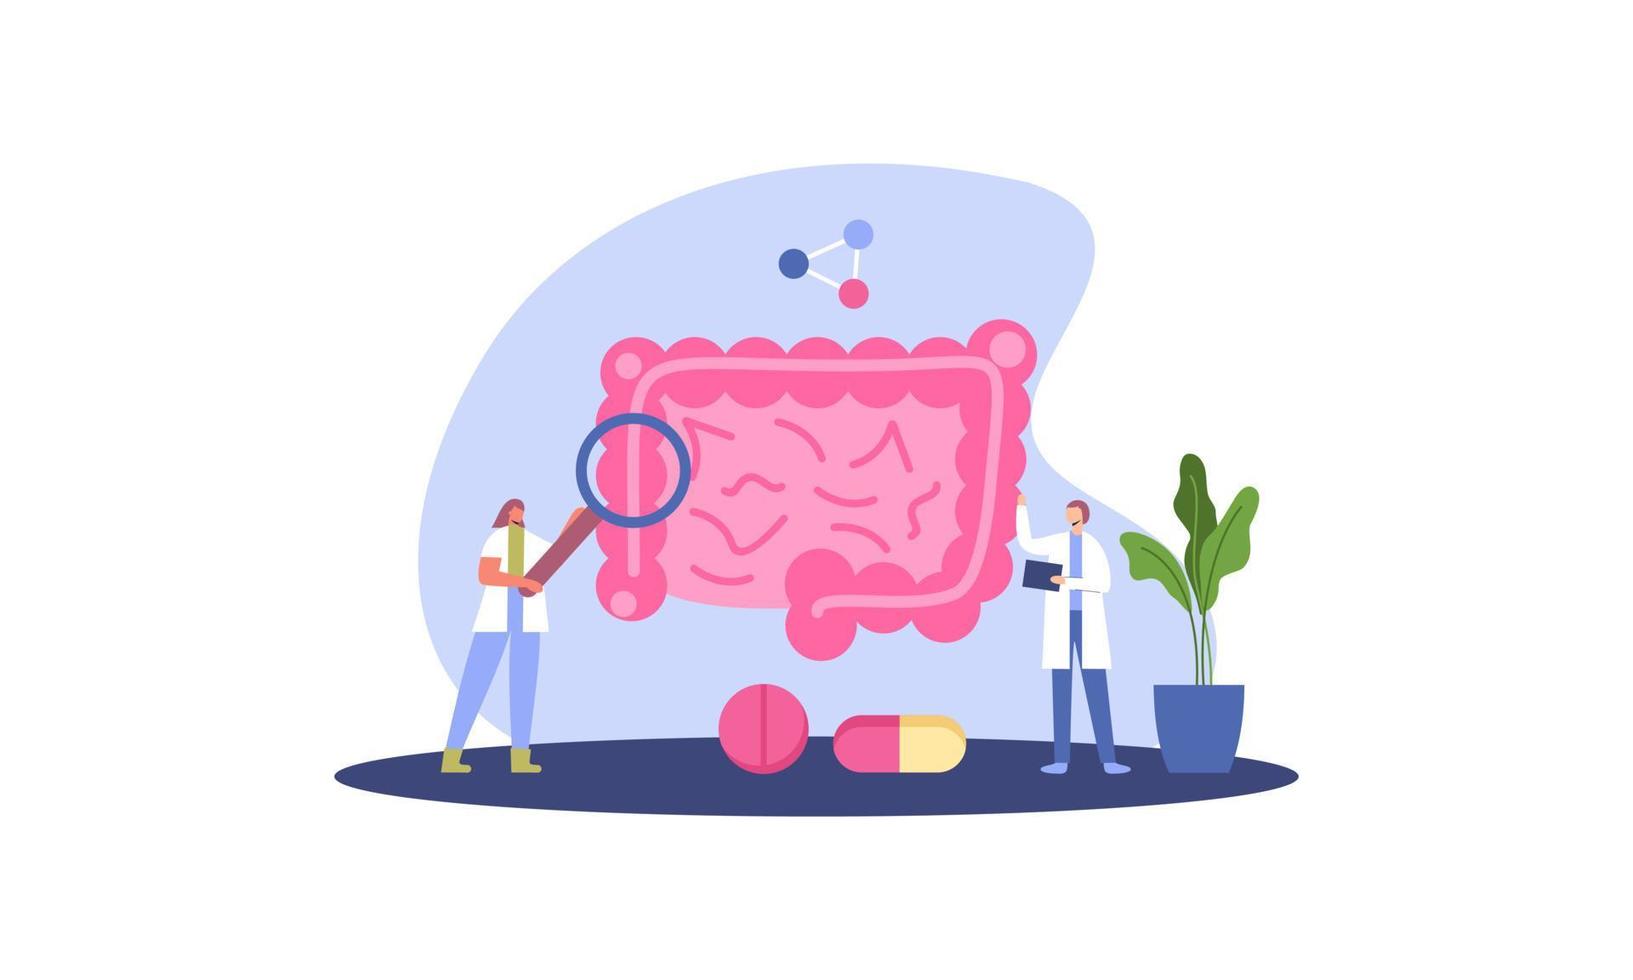 Tiny doctors examining gut flora, health concept illustration vector